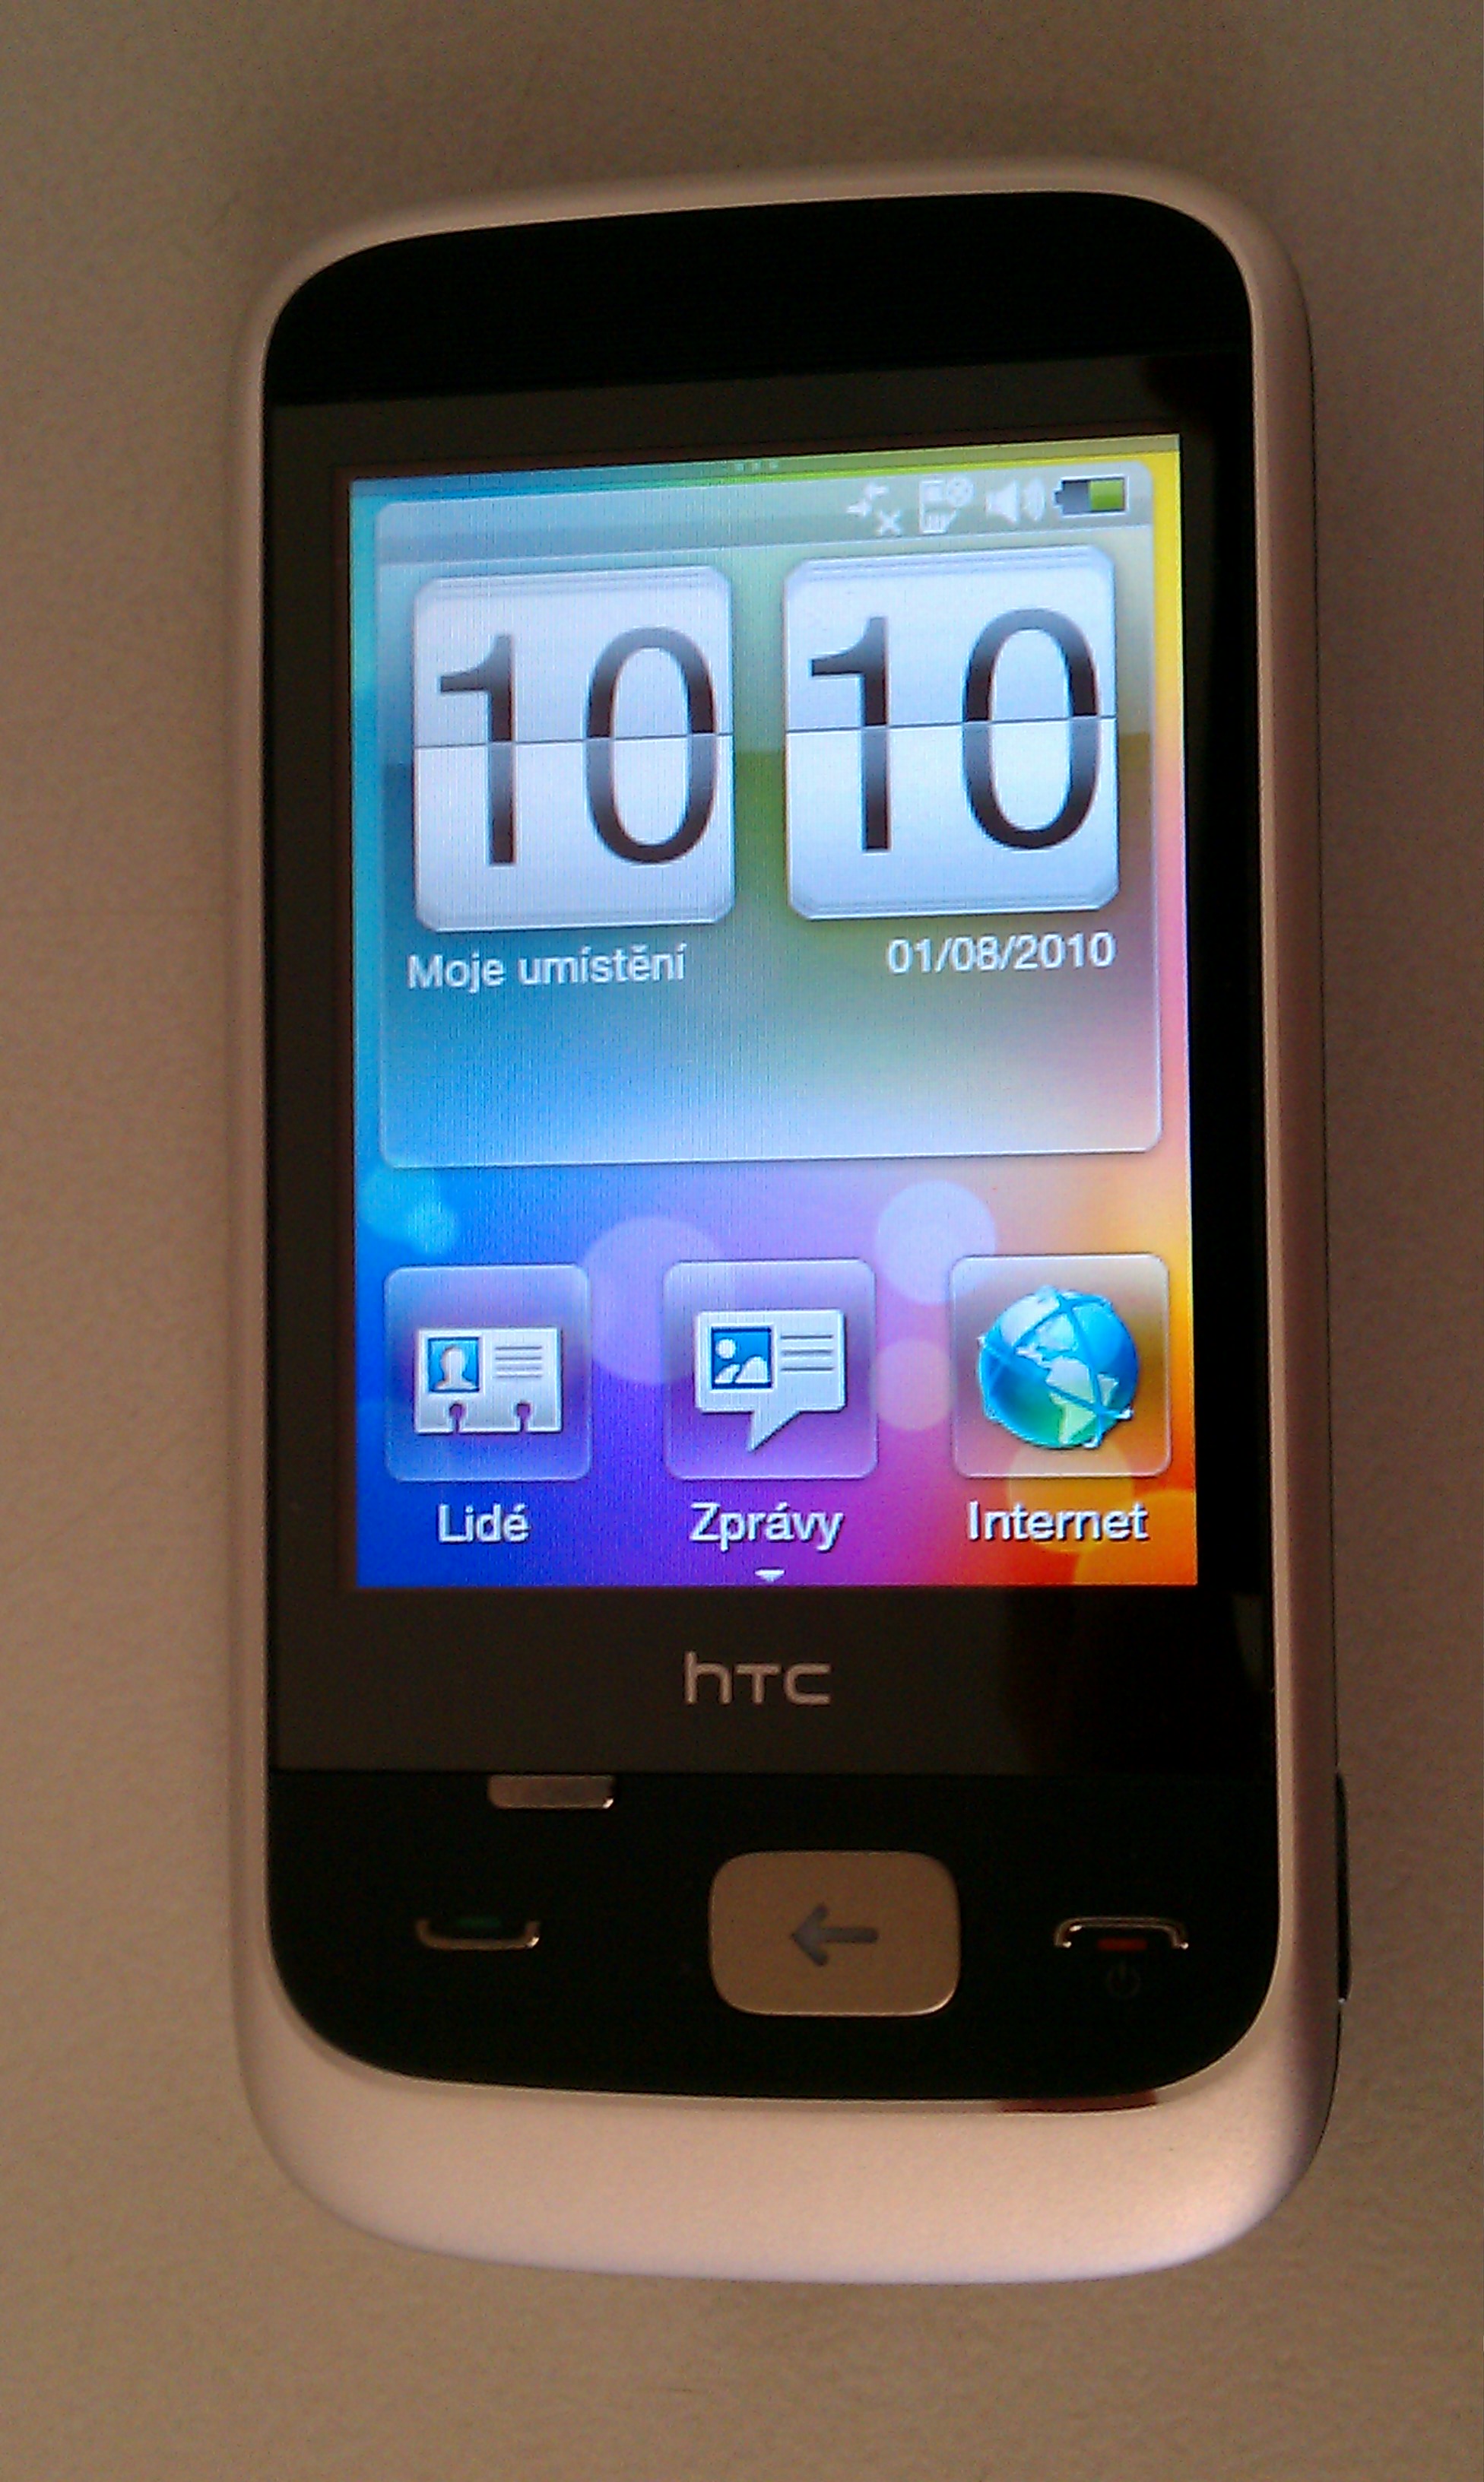 HTC Smart   Wikipedia  the free encyclopedia